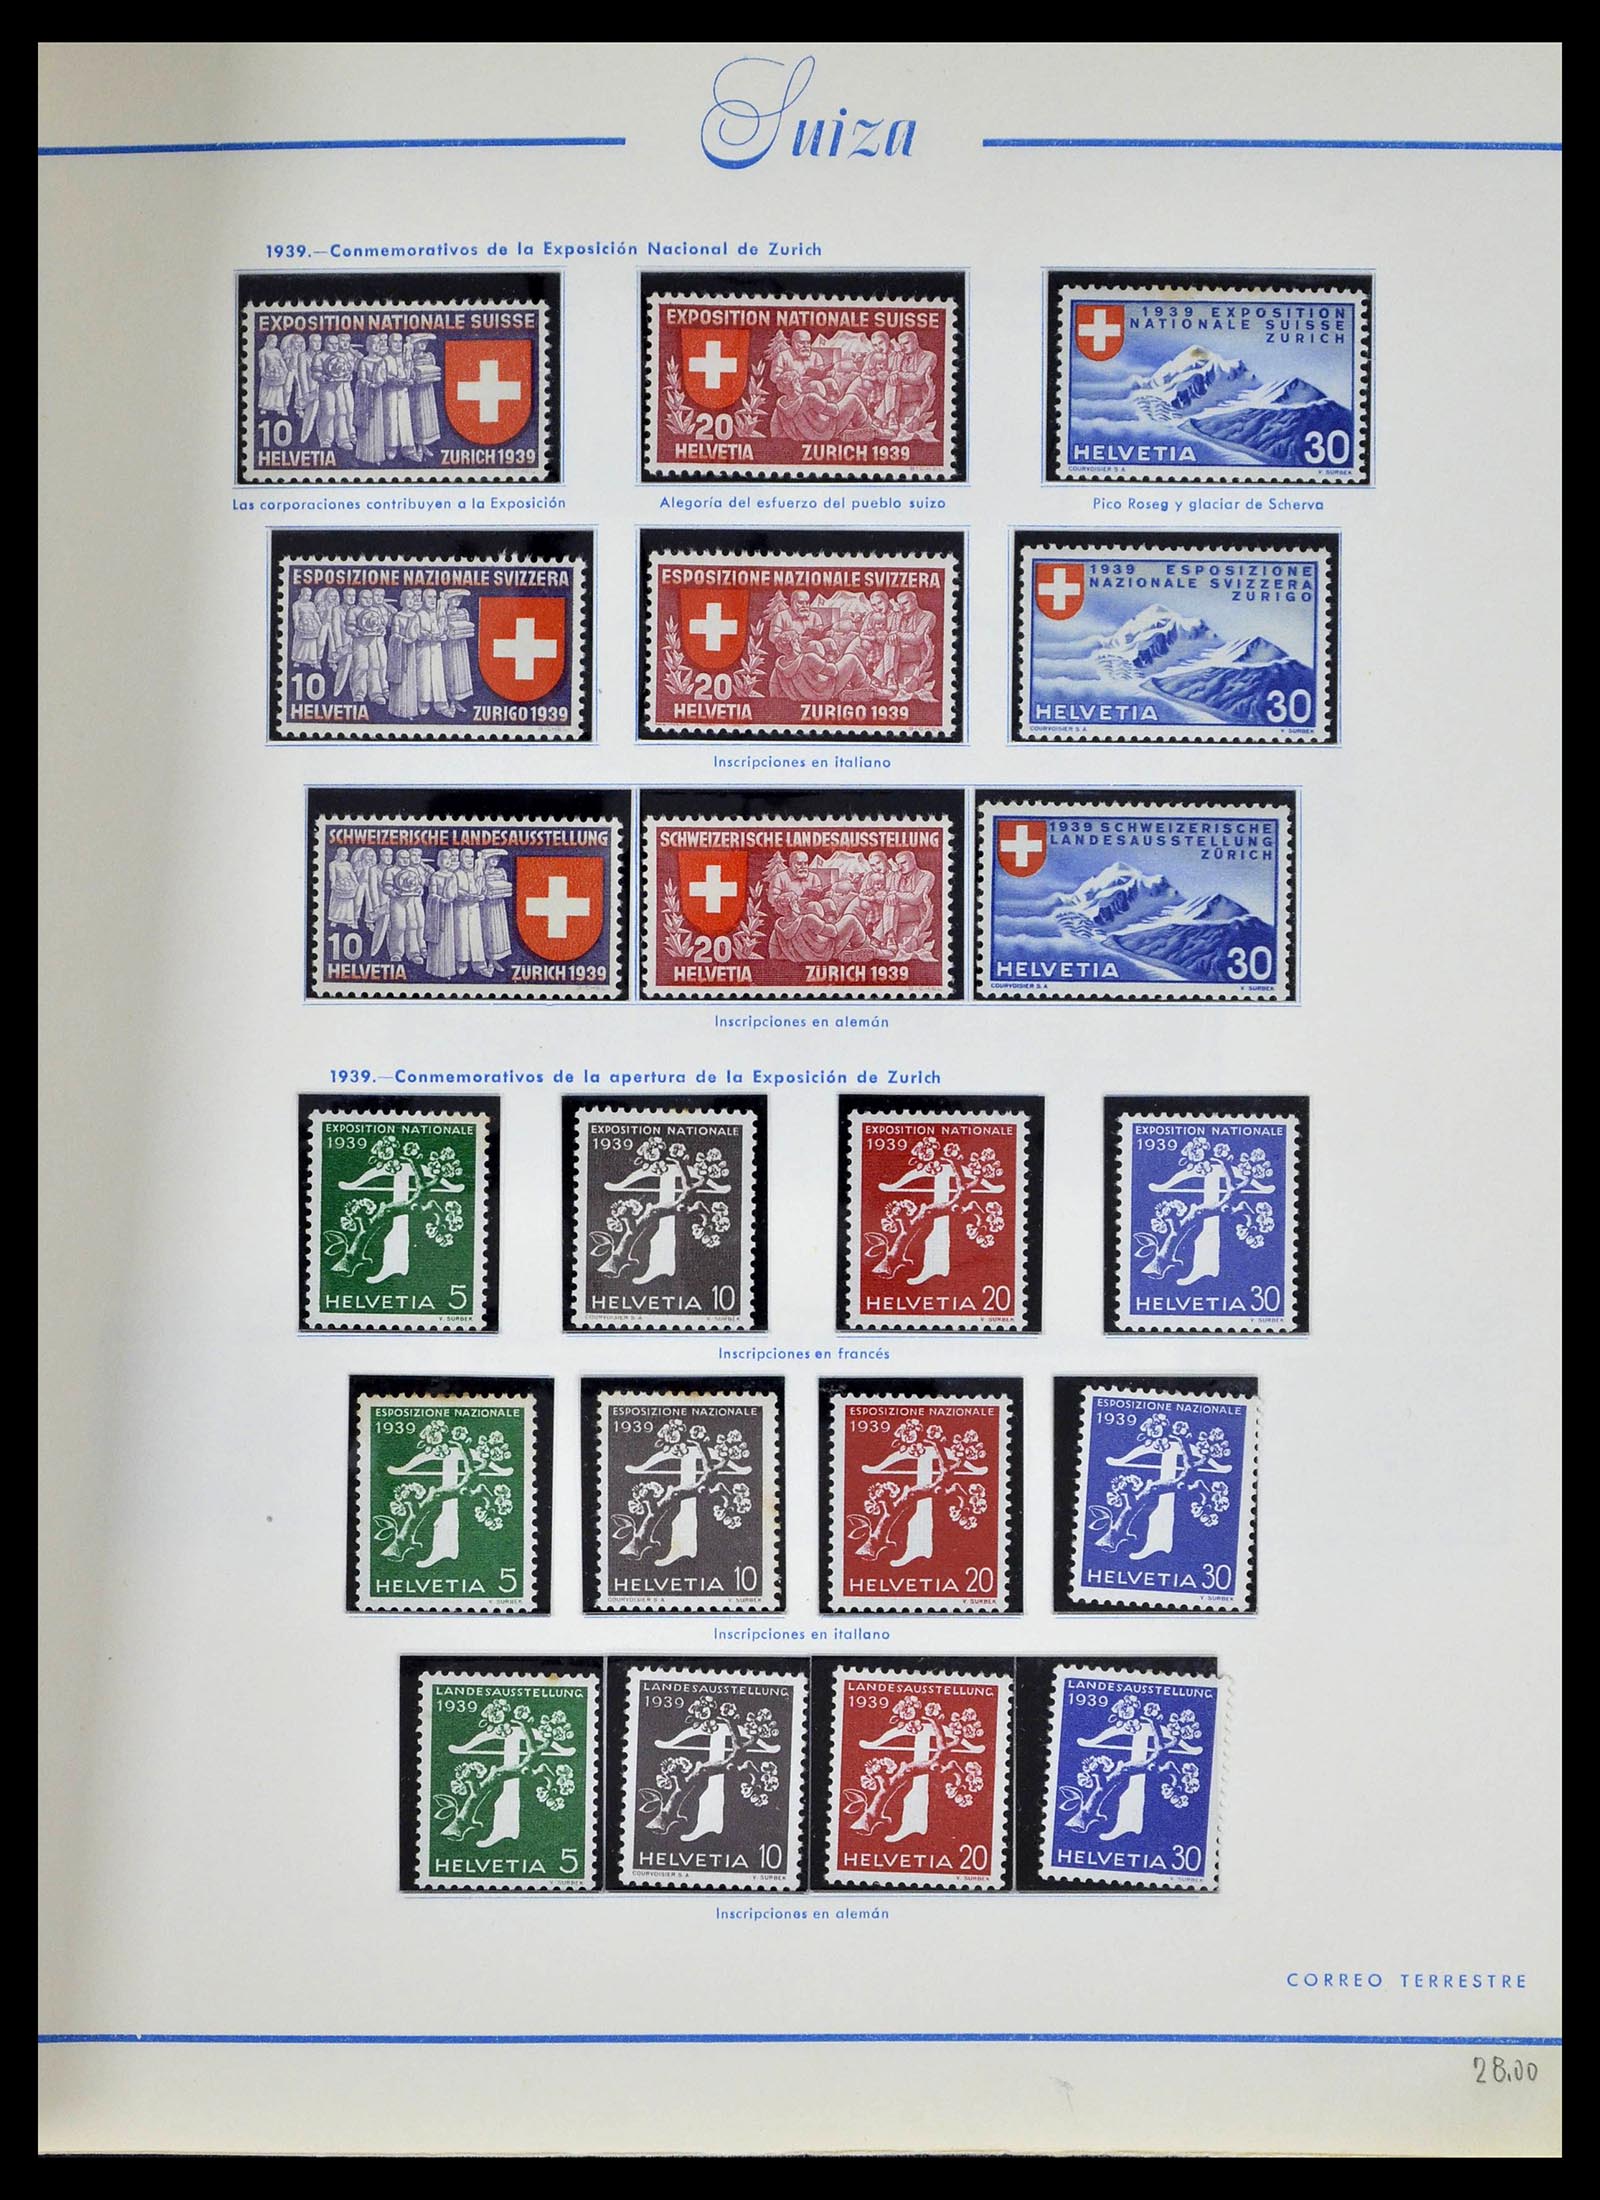 39217 0021 - Stamp collection 39217 Switzerland 1850-1986.